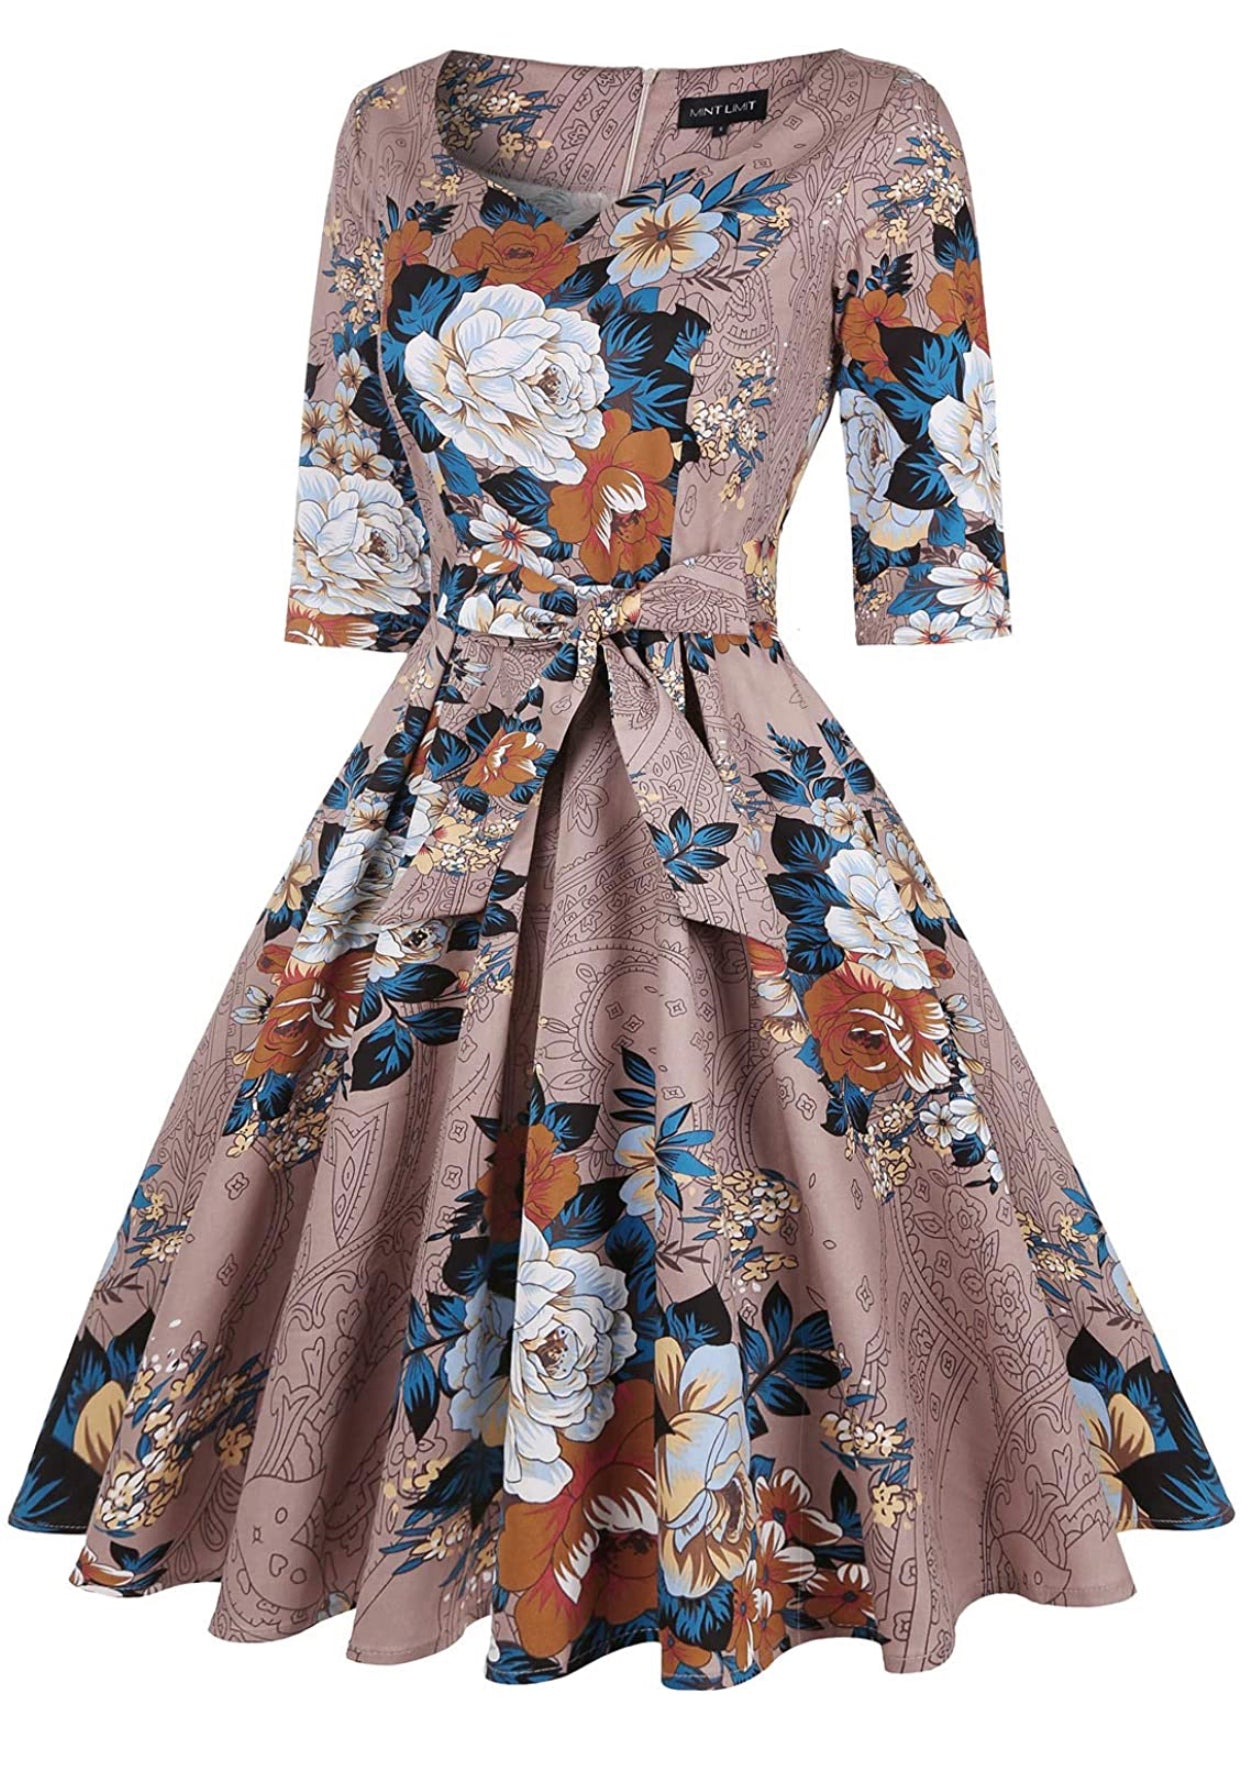 Sweetheart Neckline Rockability Floral Khaki Dress, Sizes Small - 2XLarge (US Sized 4 - 22)